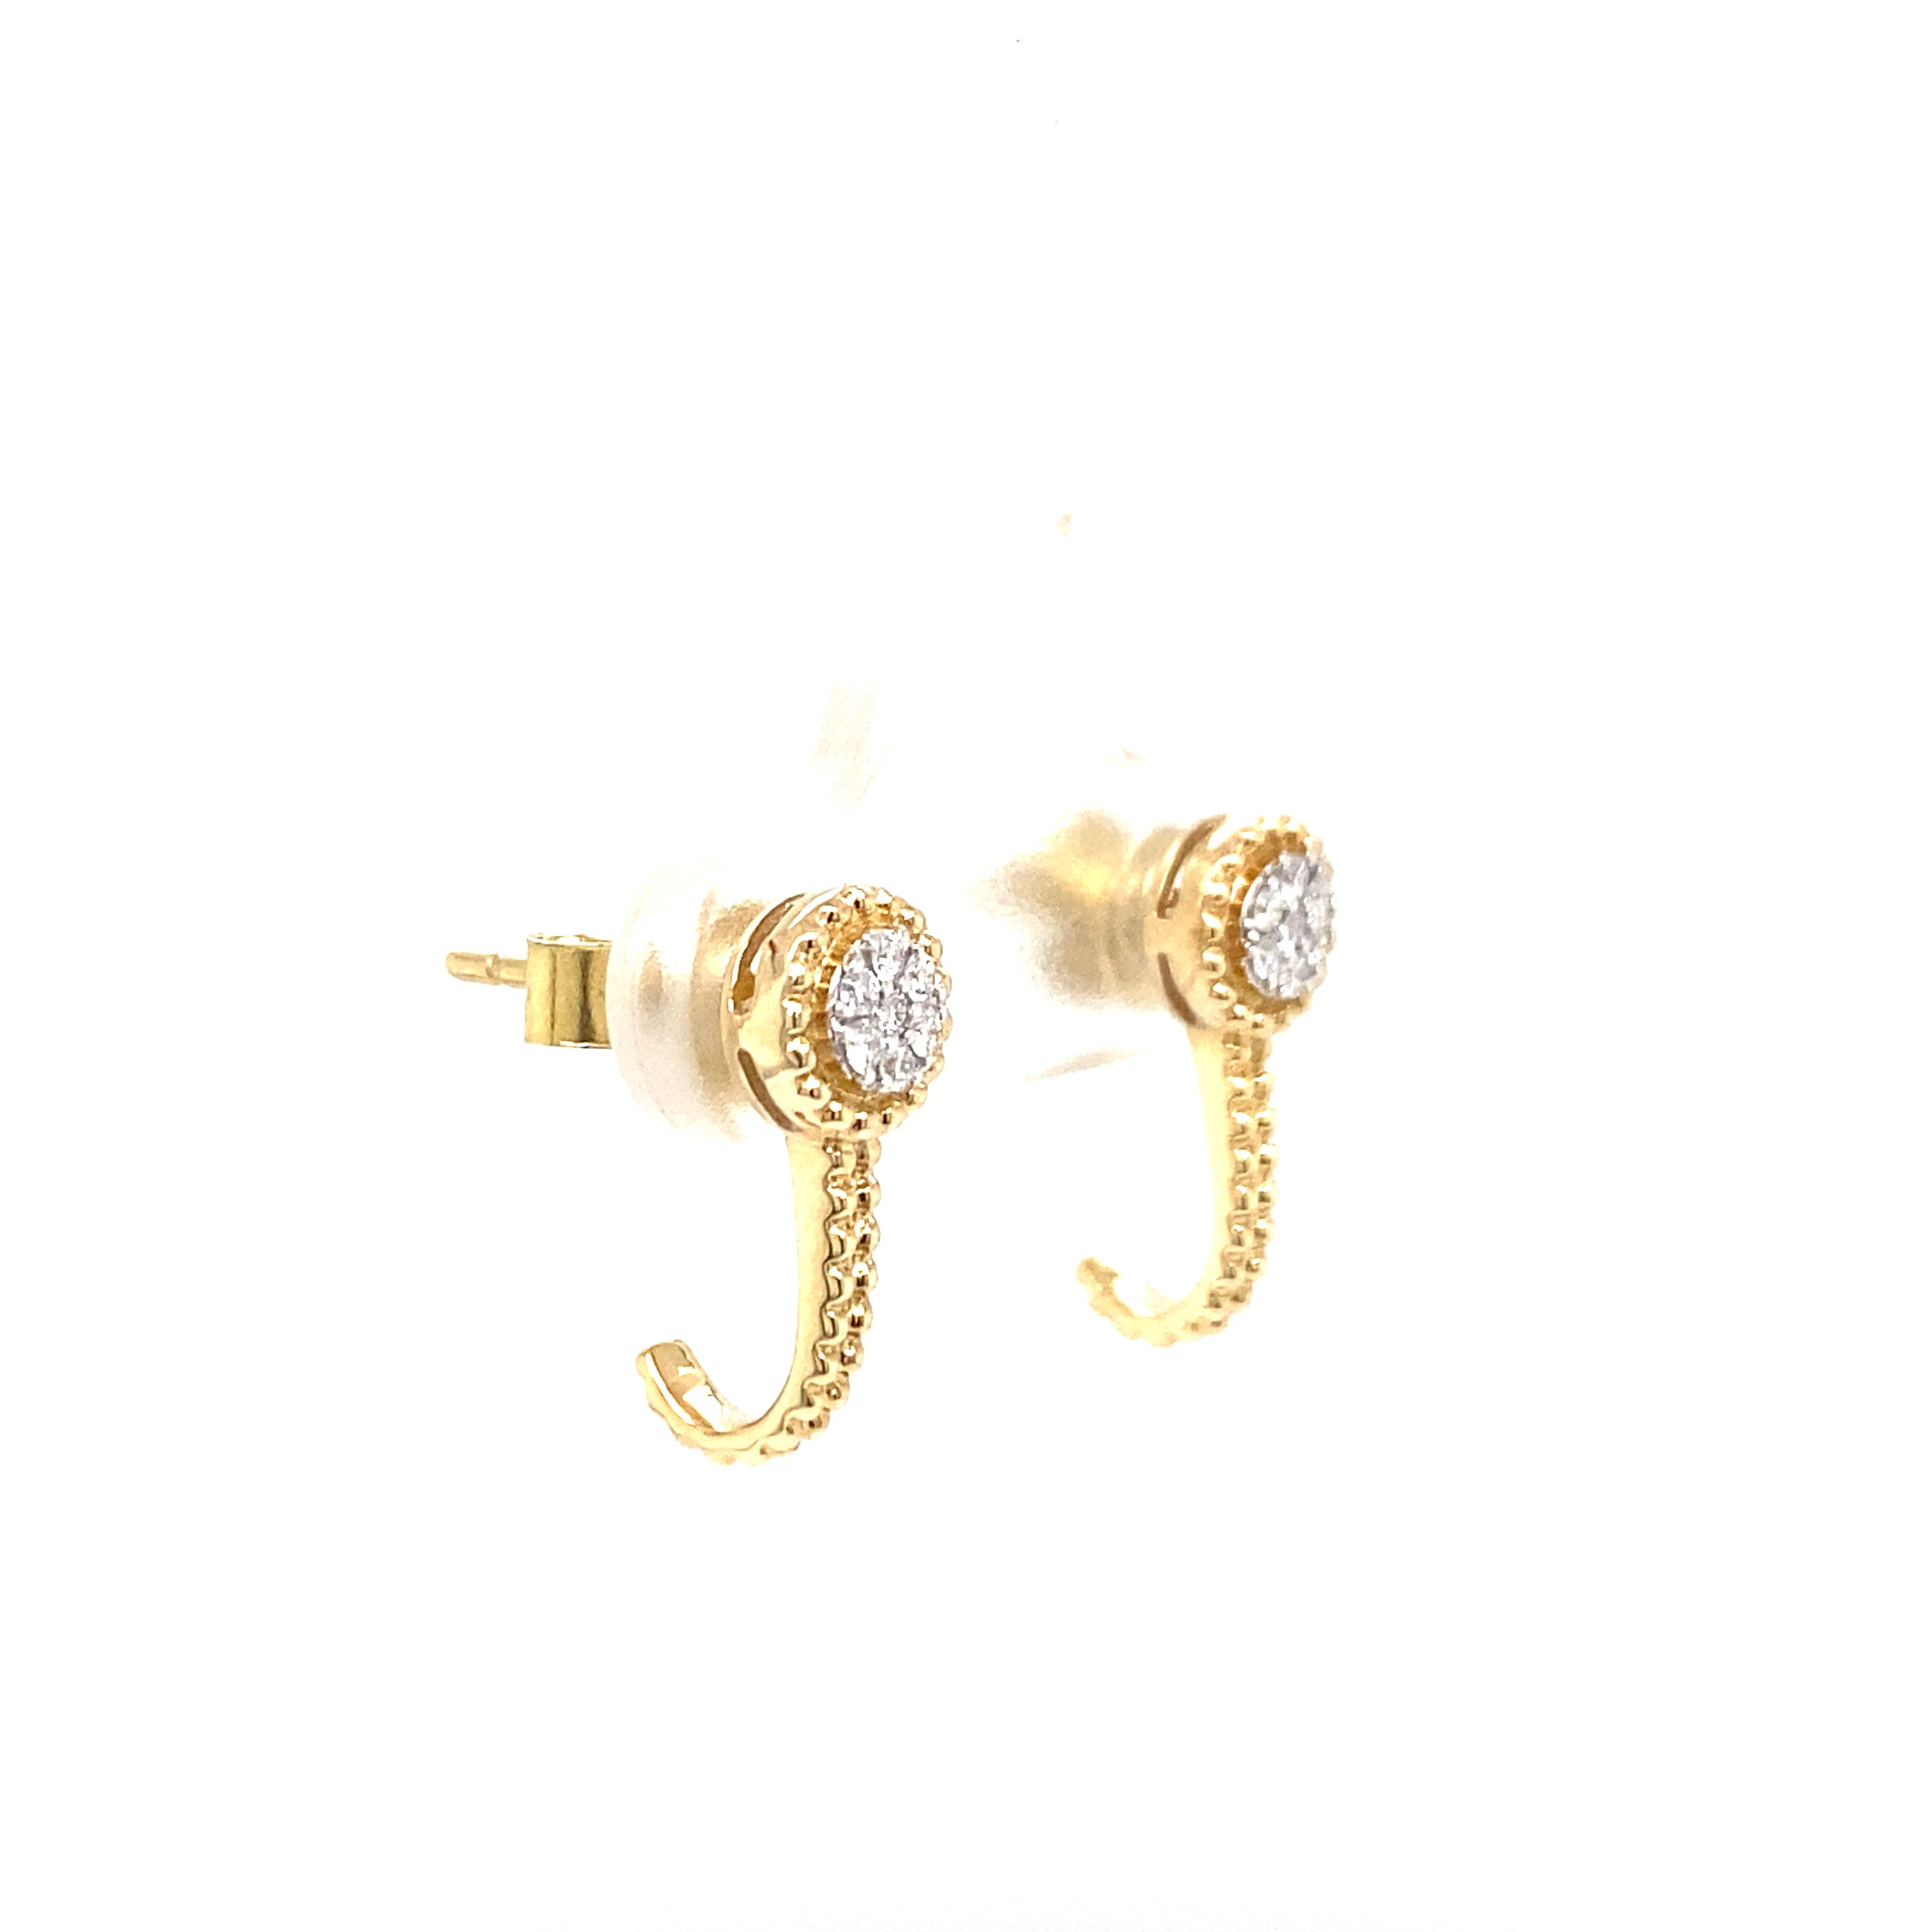 9ct yellow gold diamond bar earrings.